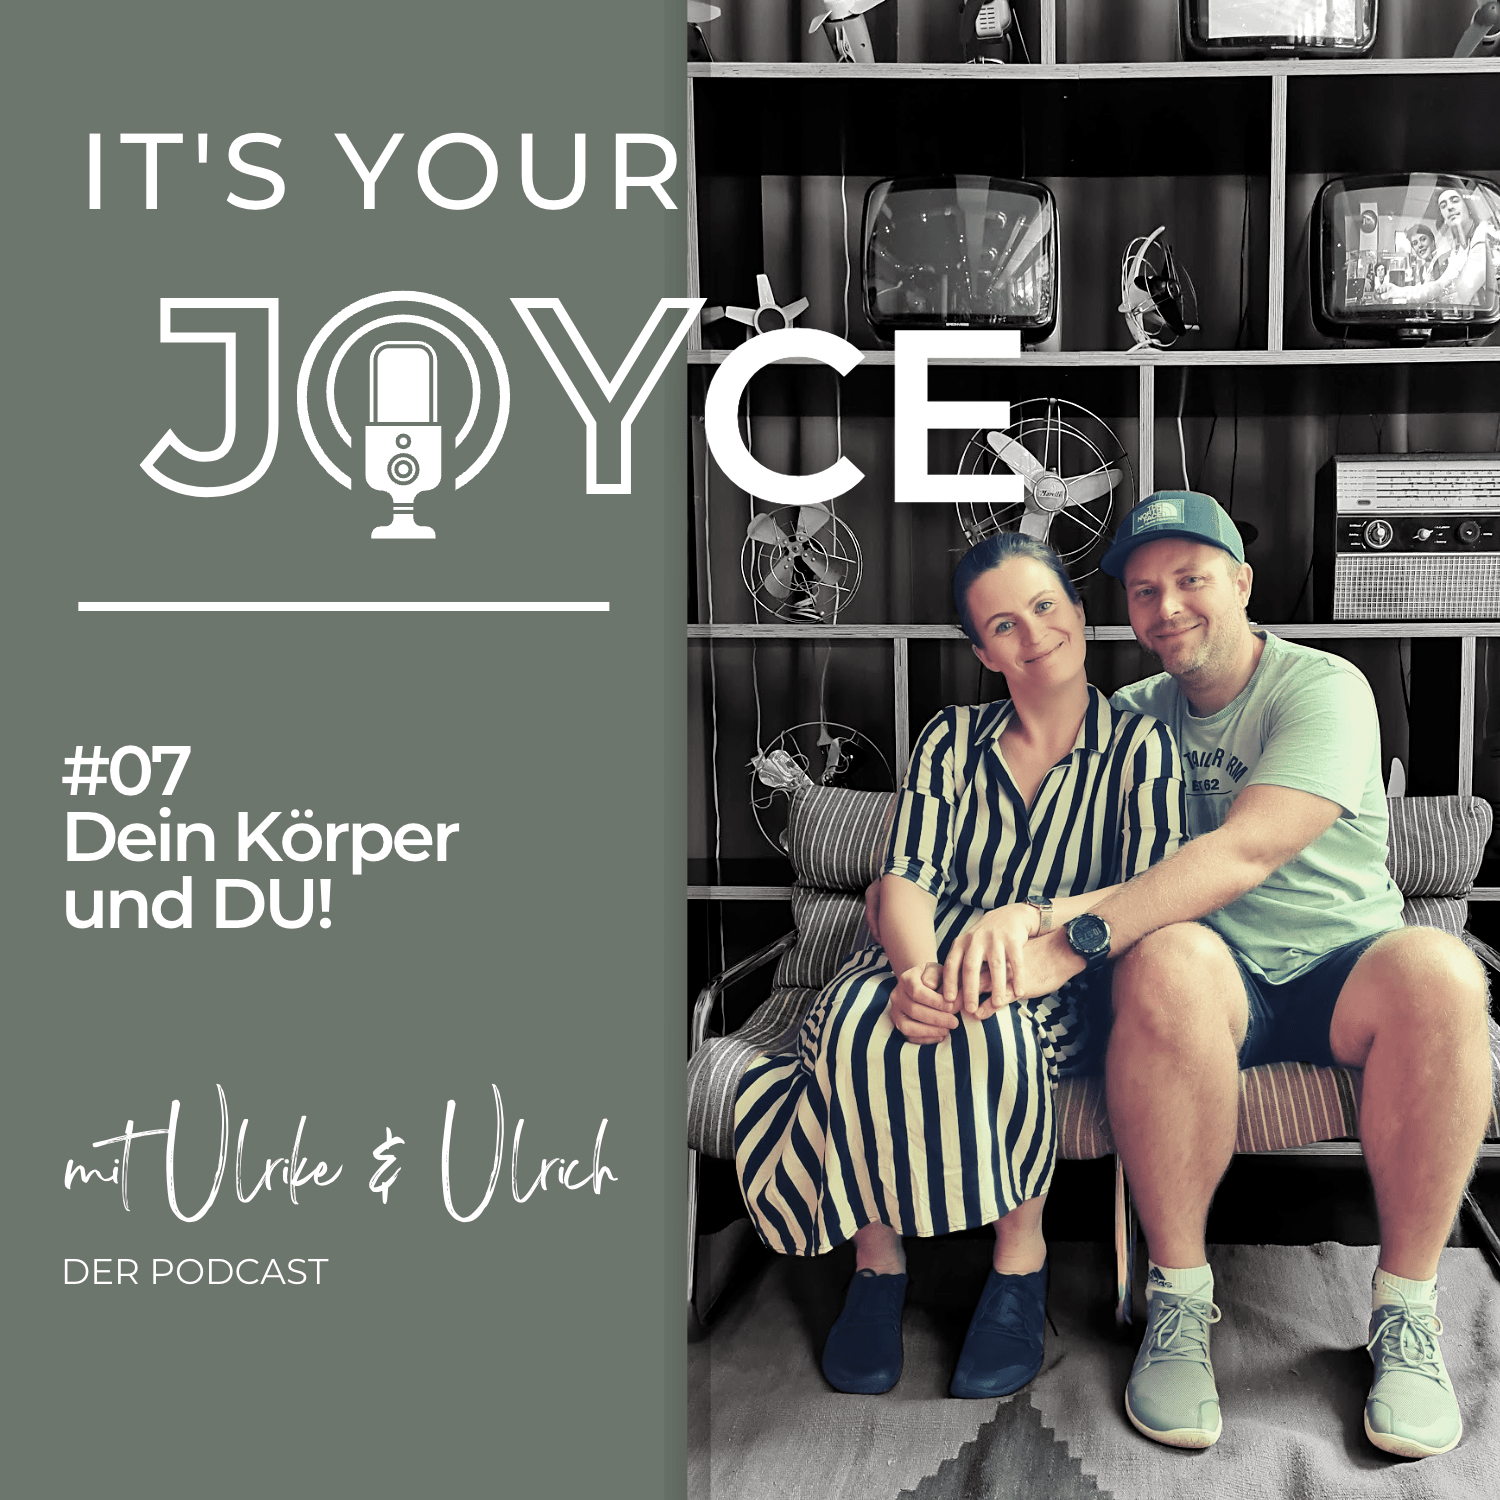 it's your joyce podcast kirchdorfer